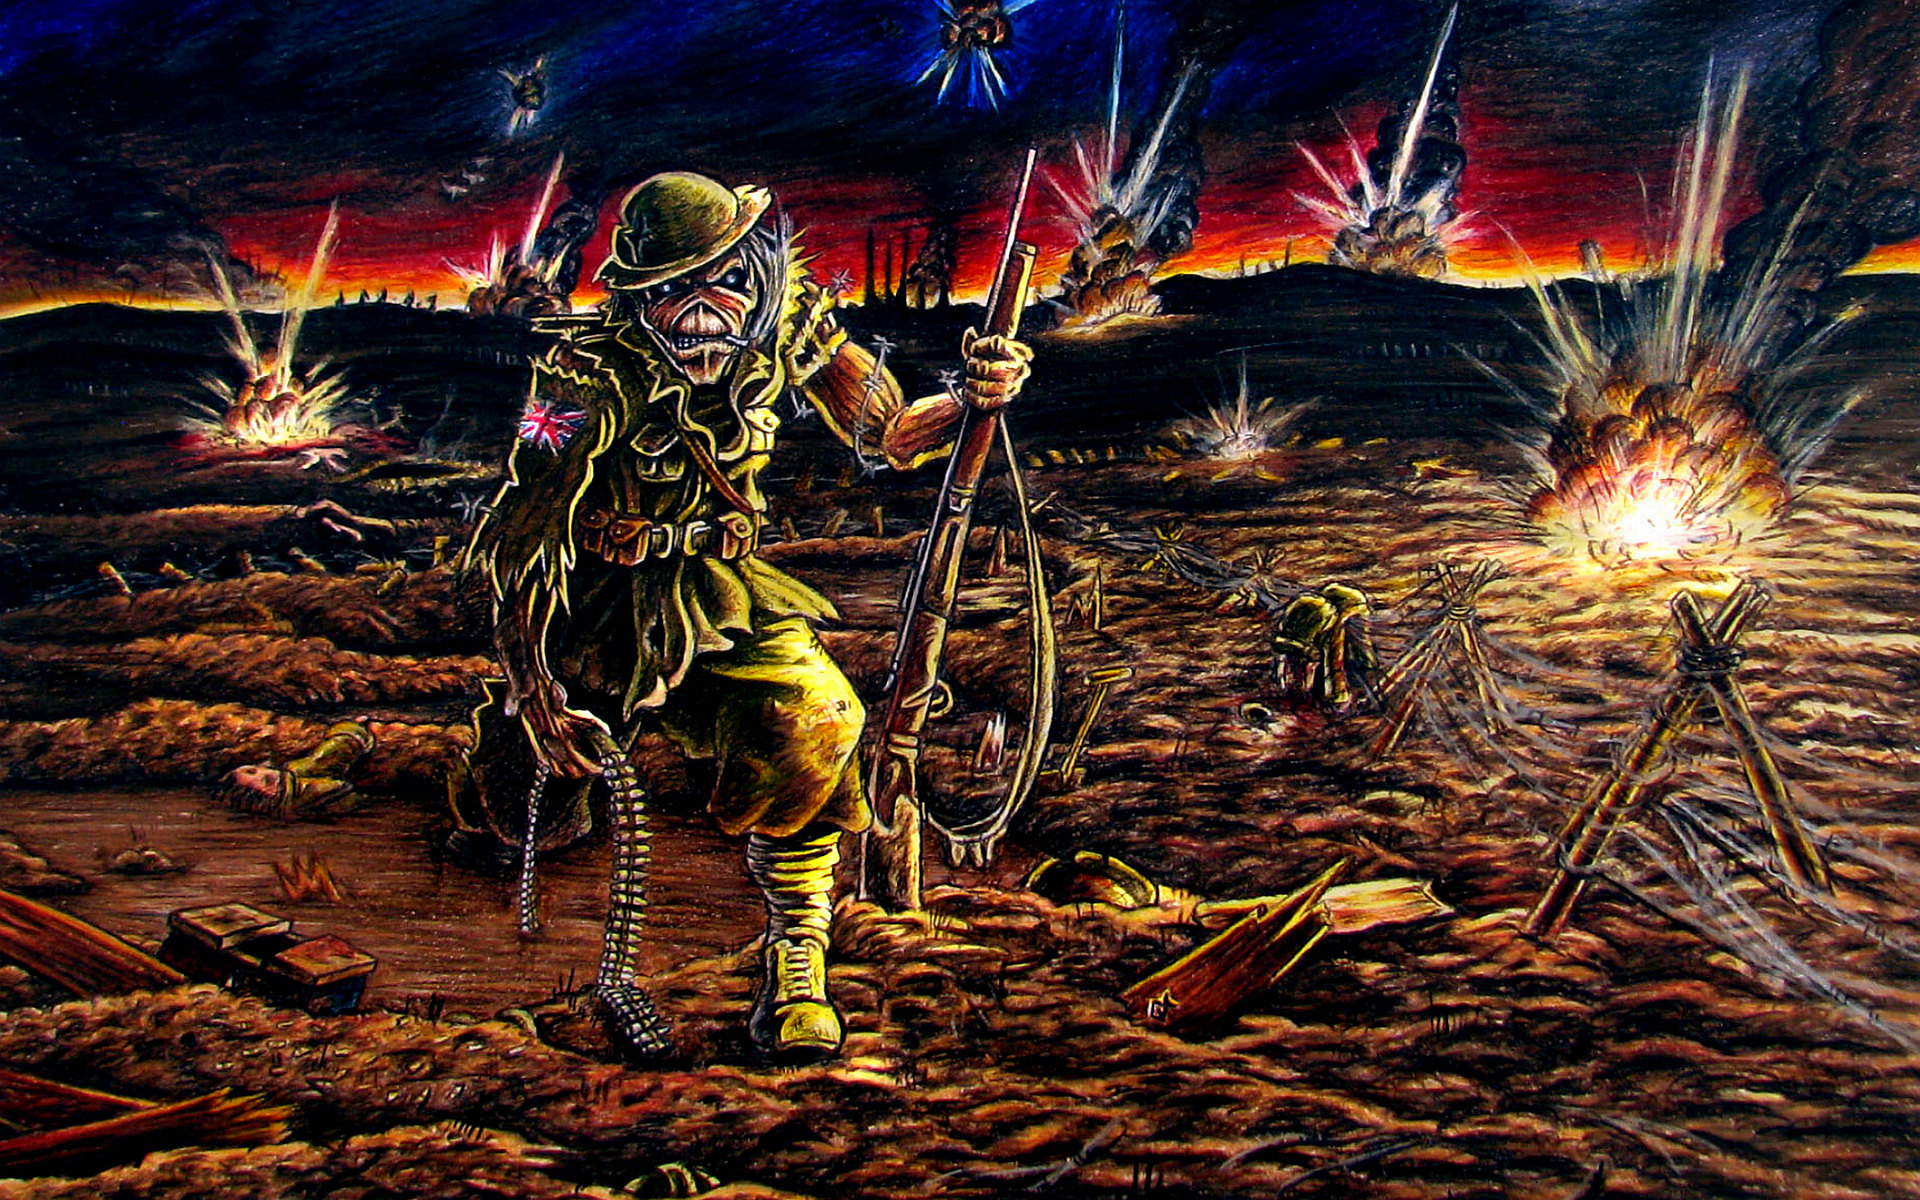 Iron Maiden HD Image Wallpaper